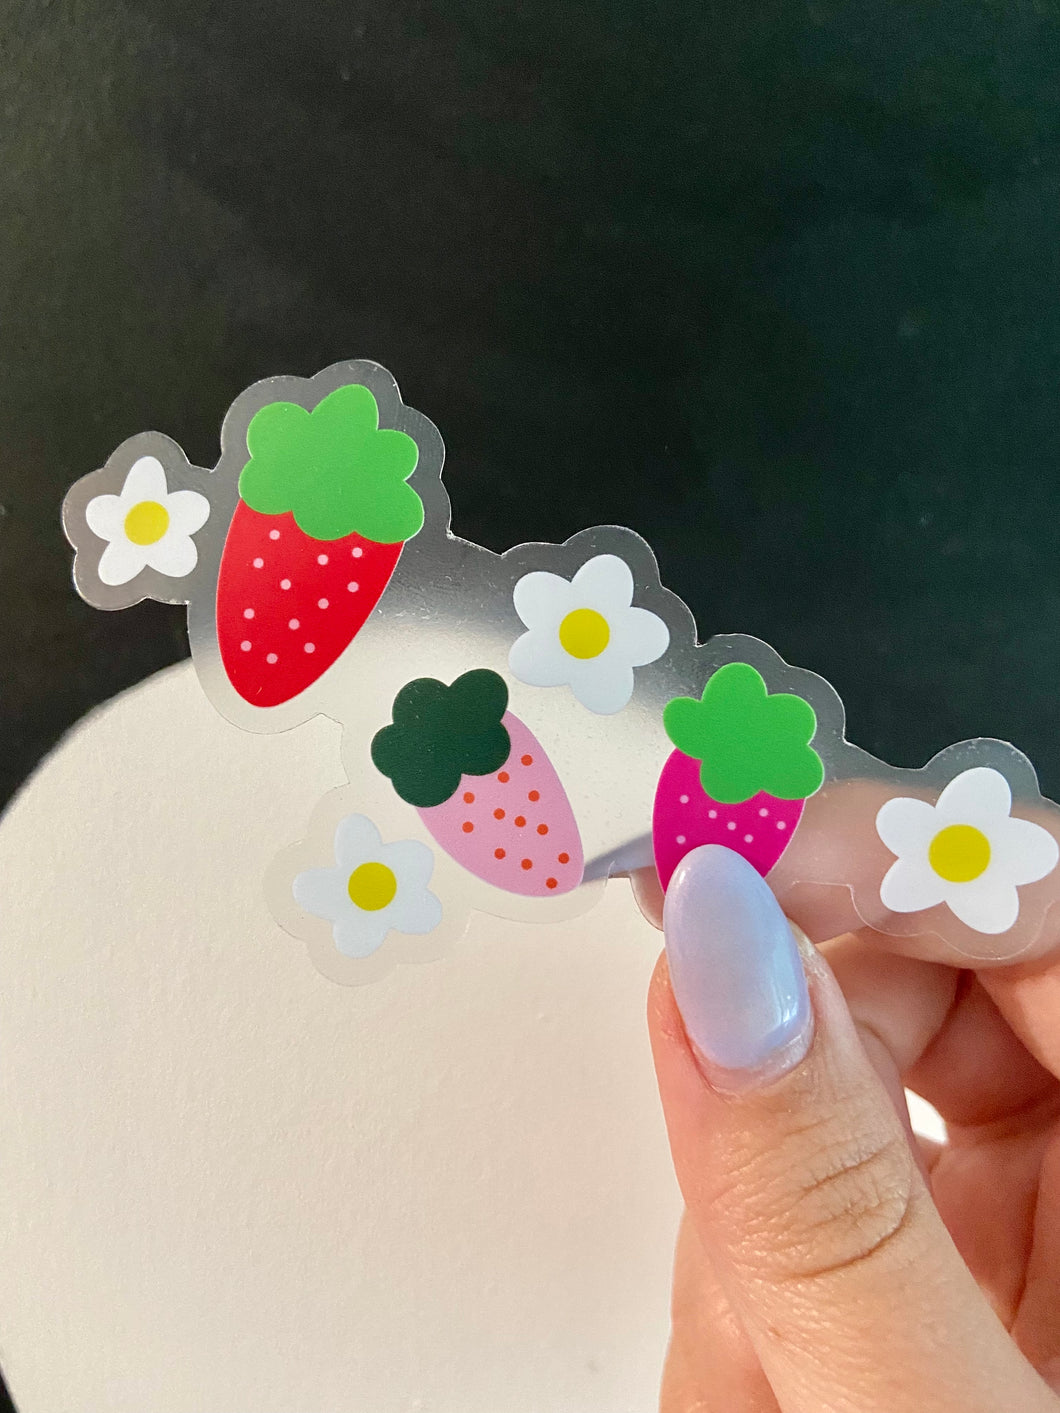 Strawberries and Daisies Sticker